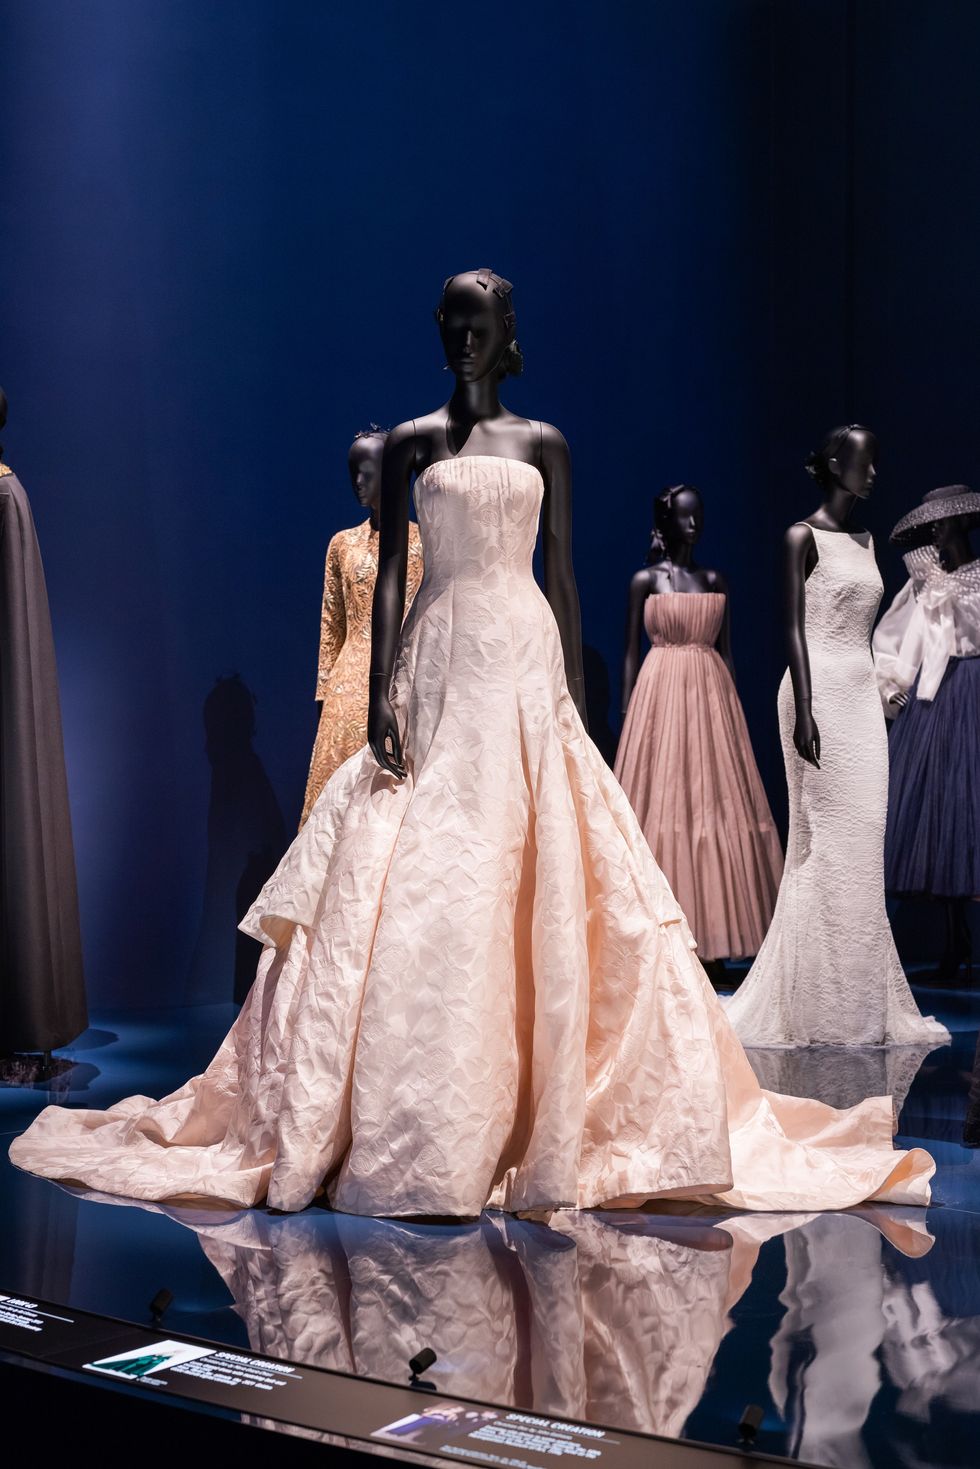 Christian Dior: Designer of Dreams” Exhibit Is Headed To Brooklyn!